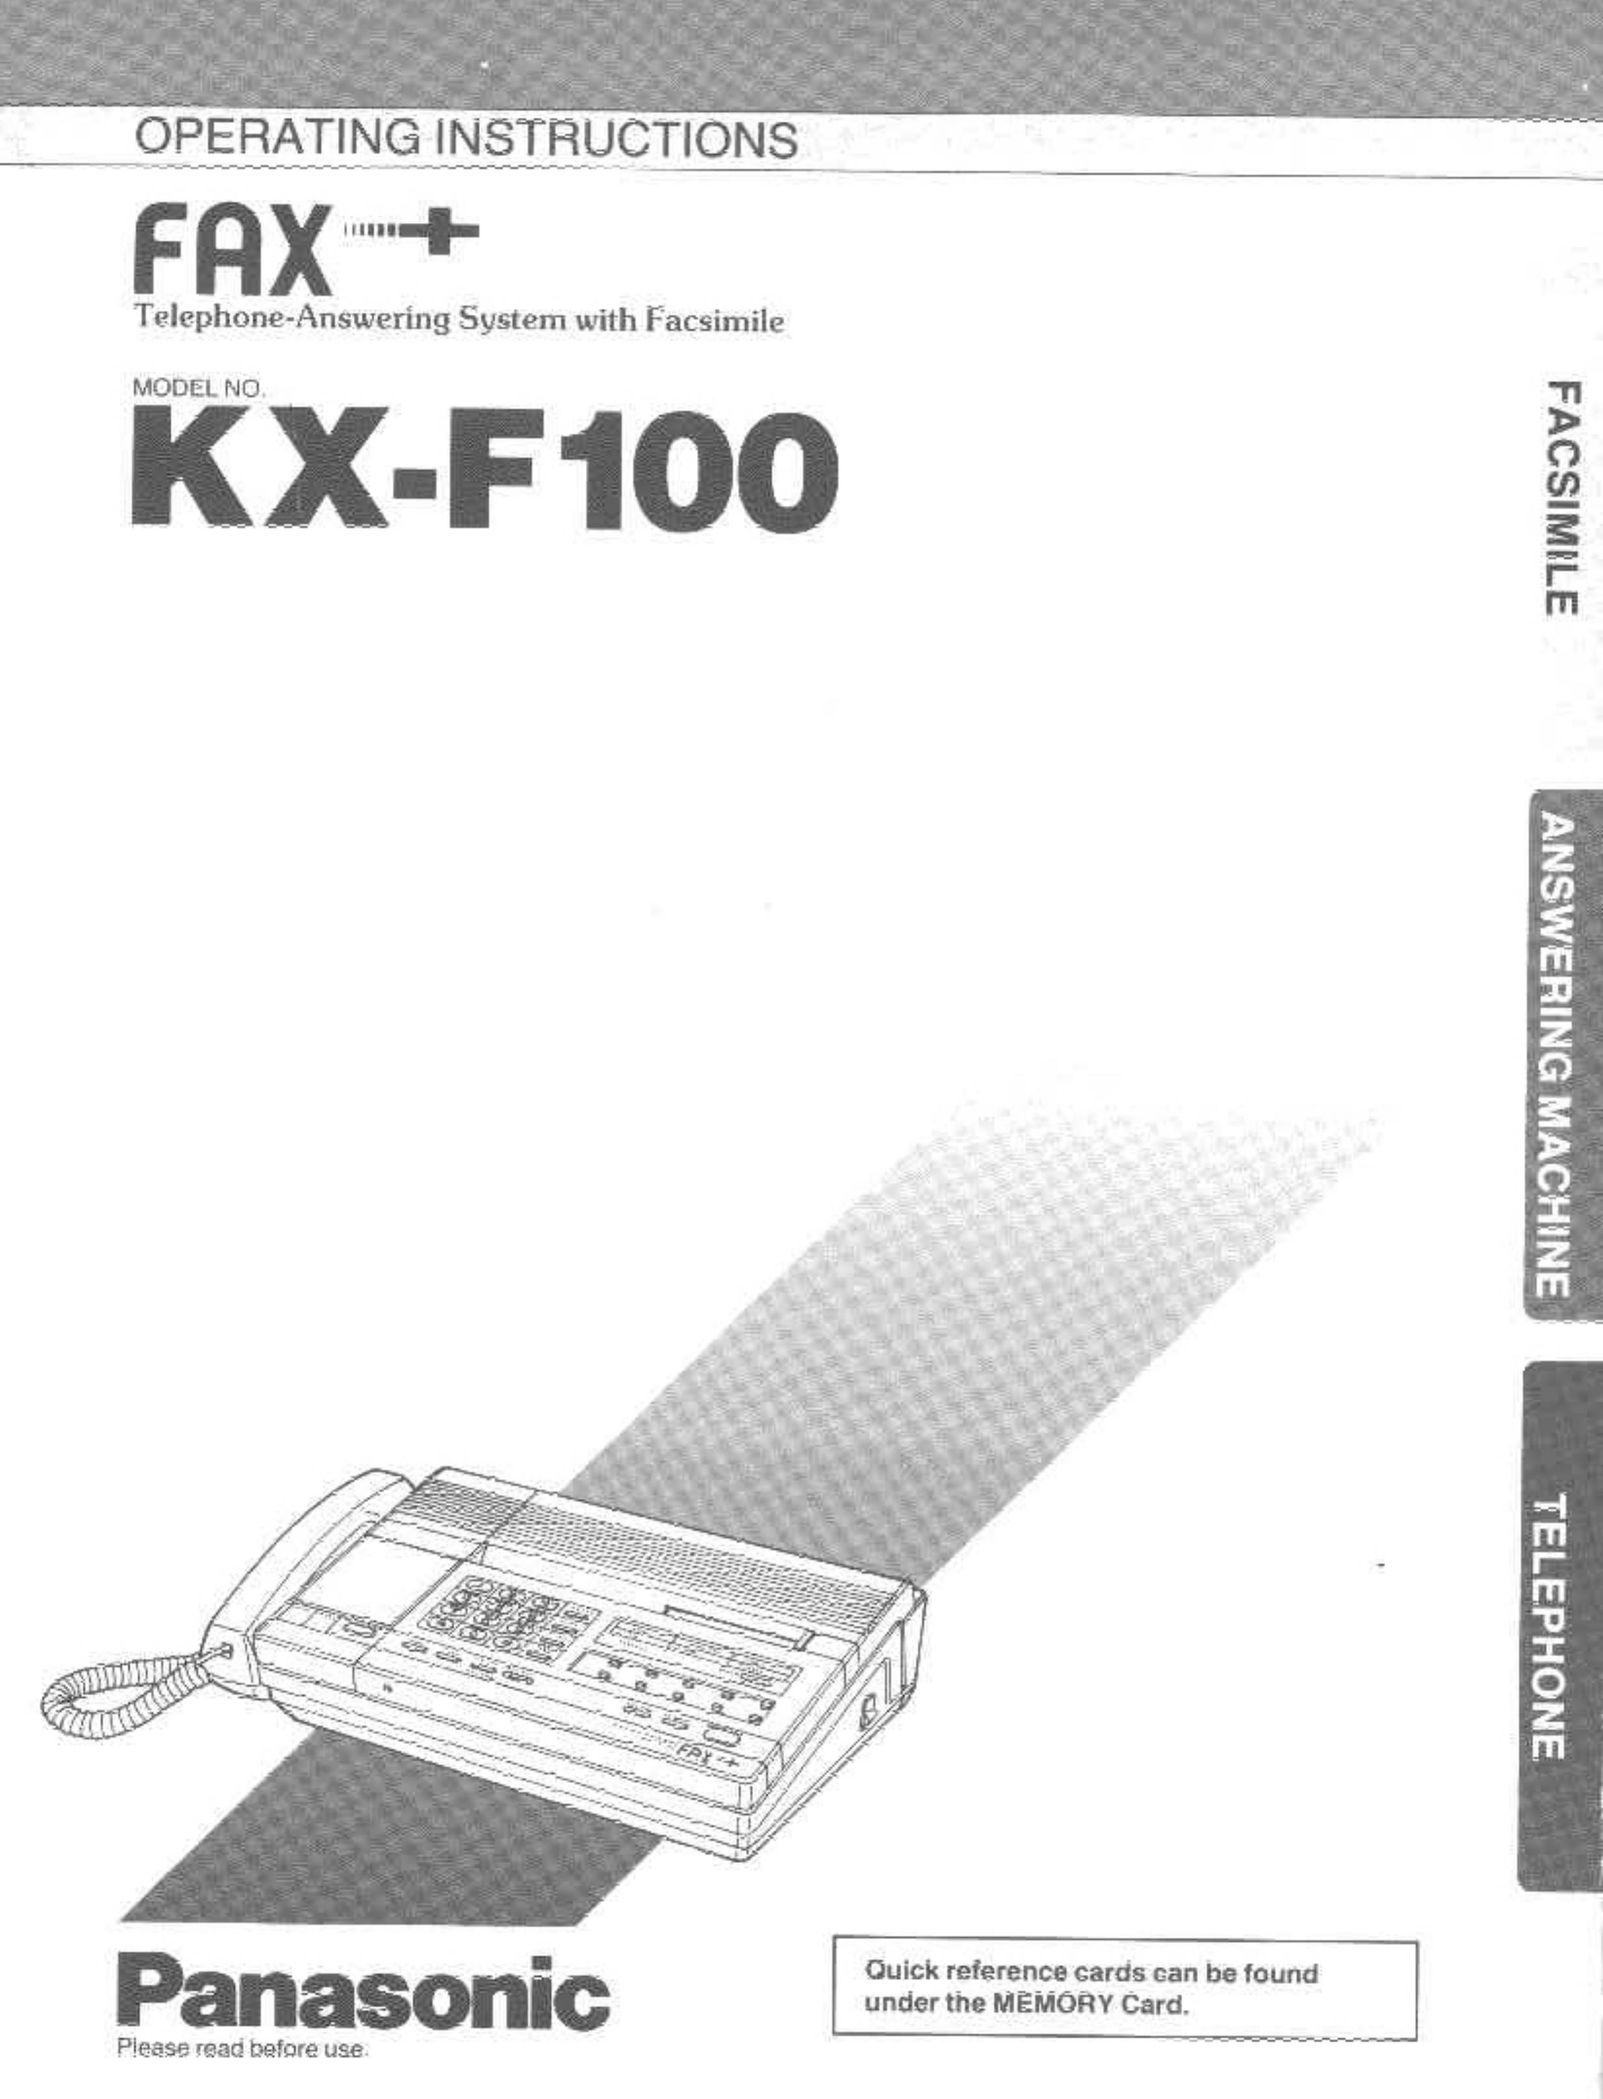 Panasonic KX-F100 Fax Machine User Manual